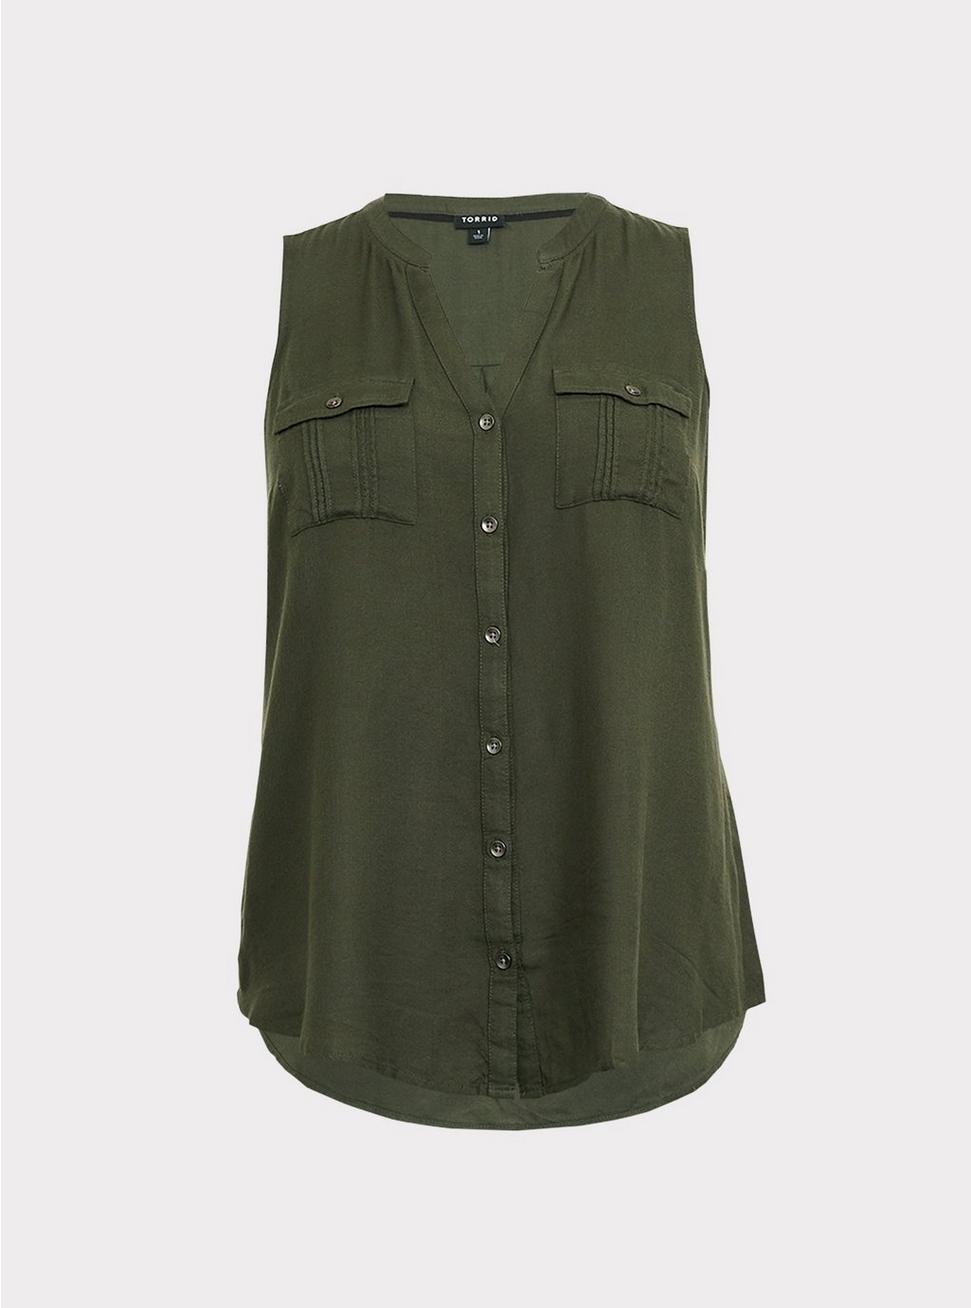 Plus Size - Olive Green Twill Utility Pintuck Shirt - Torrid